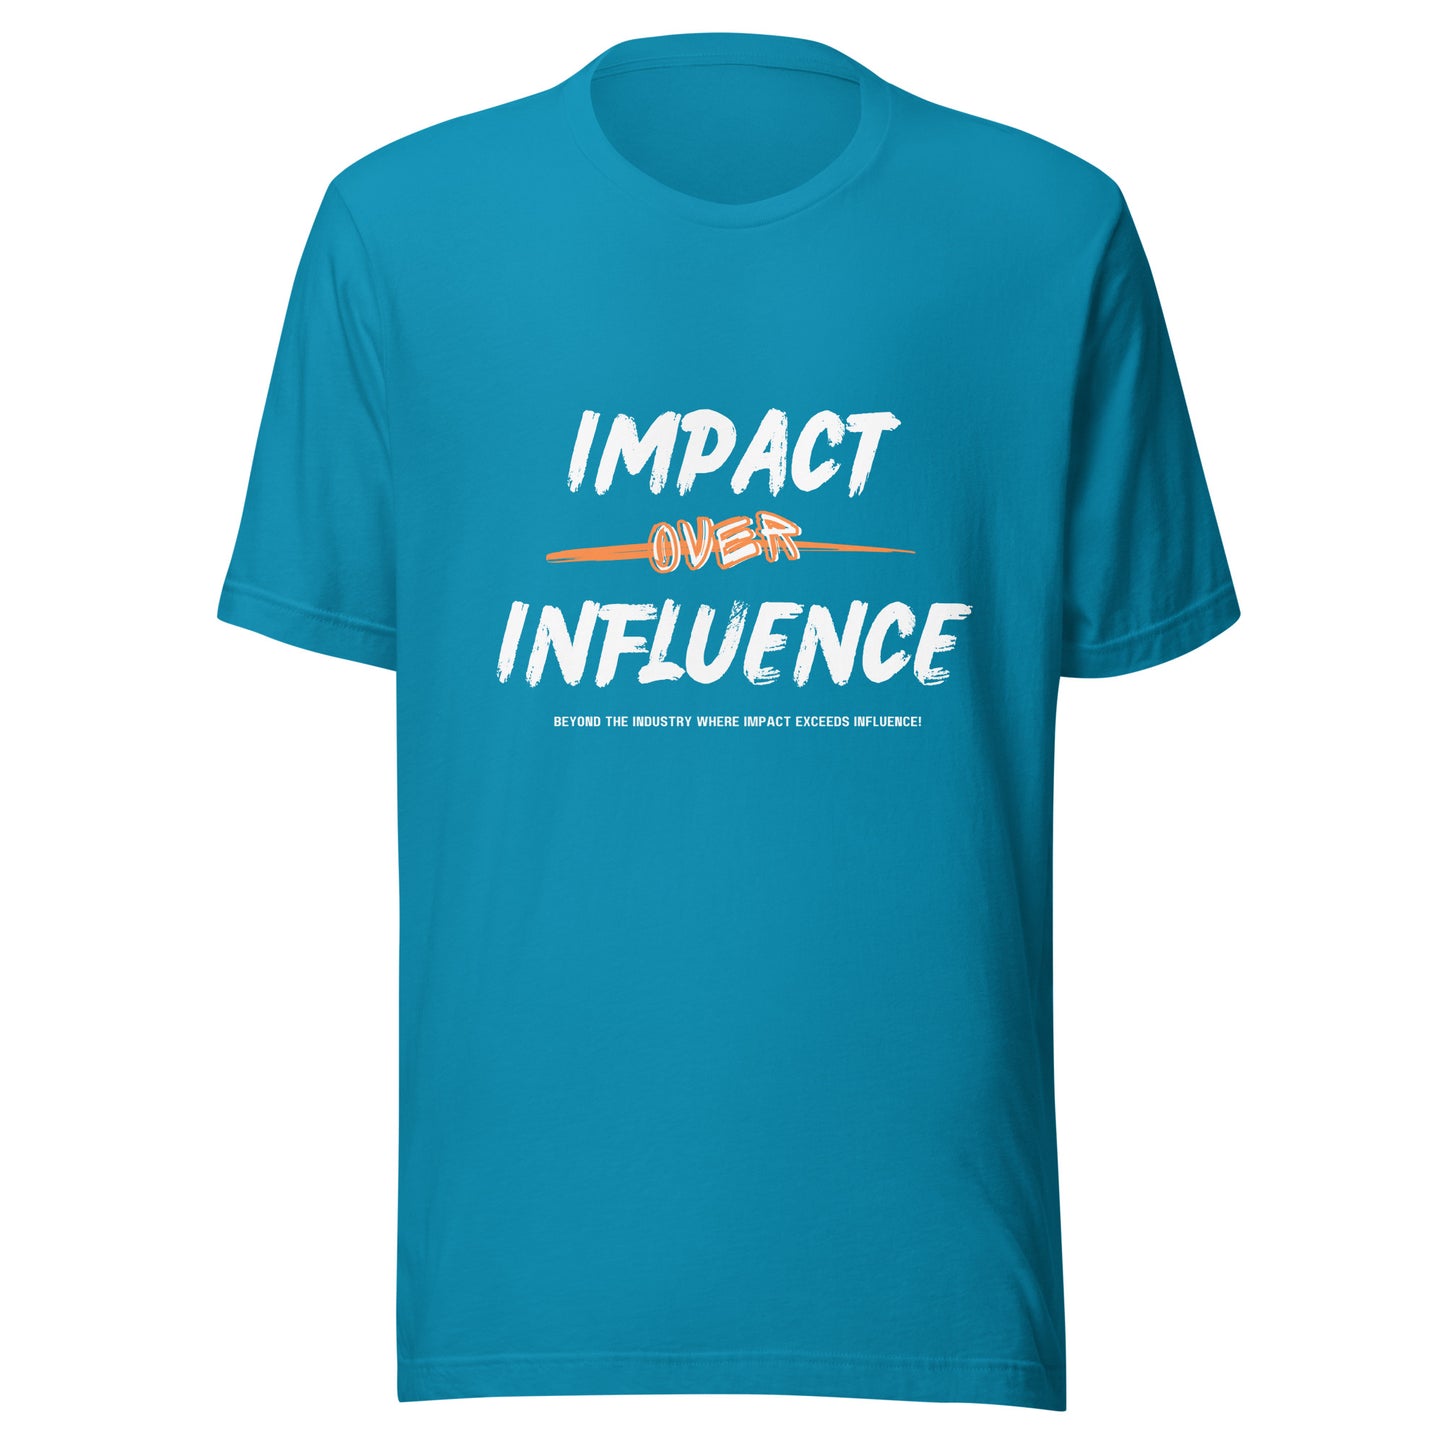 IMPACT OVER INFLUENCE (BLUE/ORANGE/AQUA)